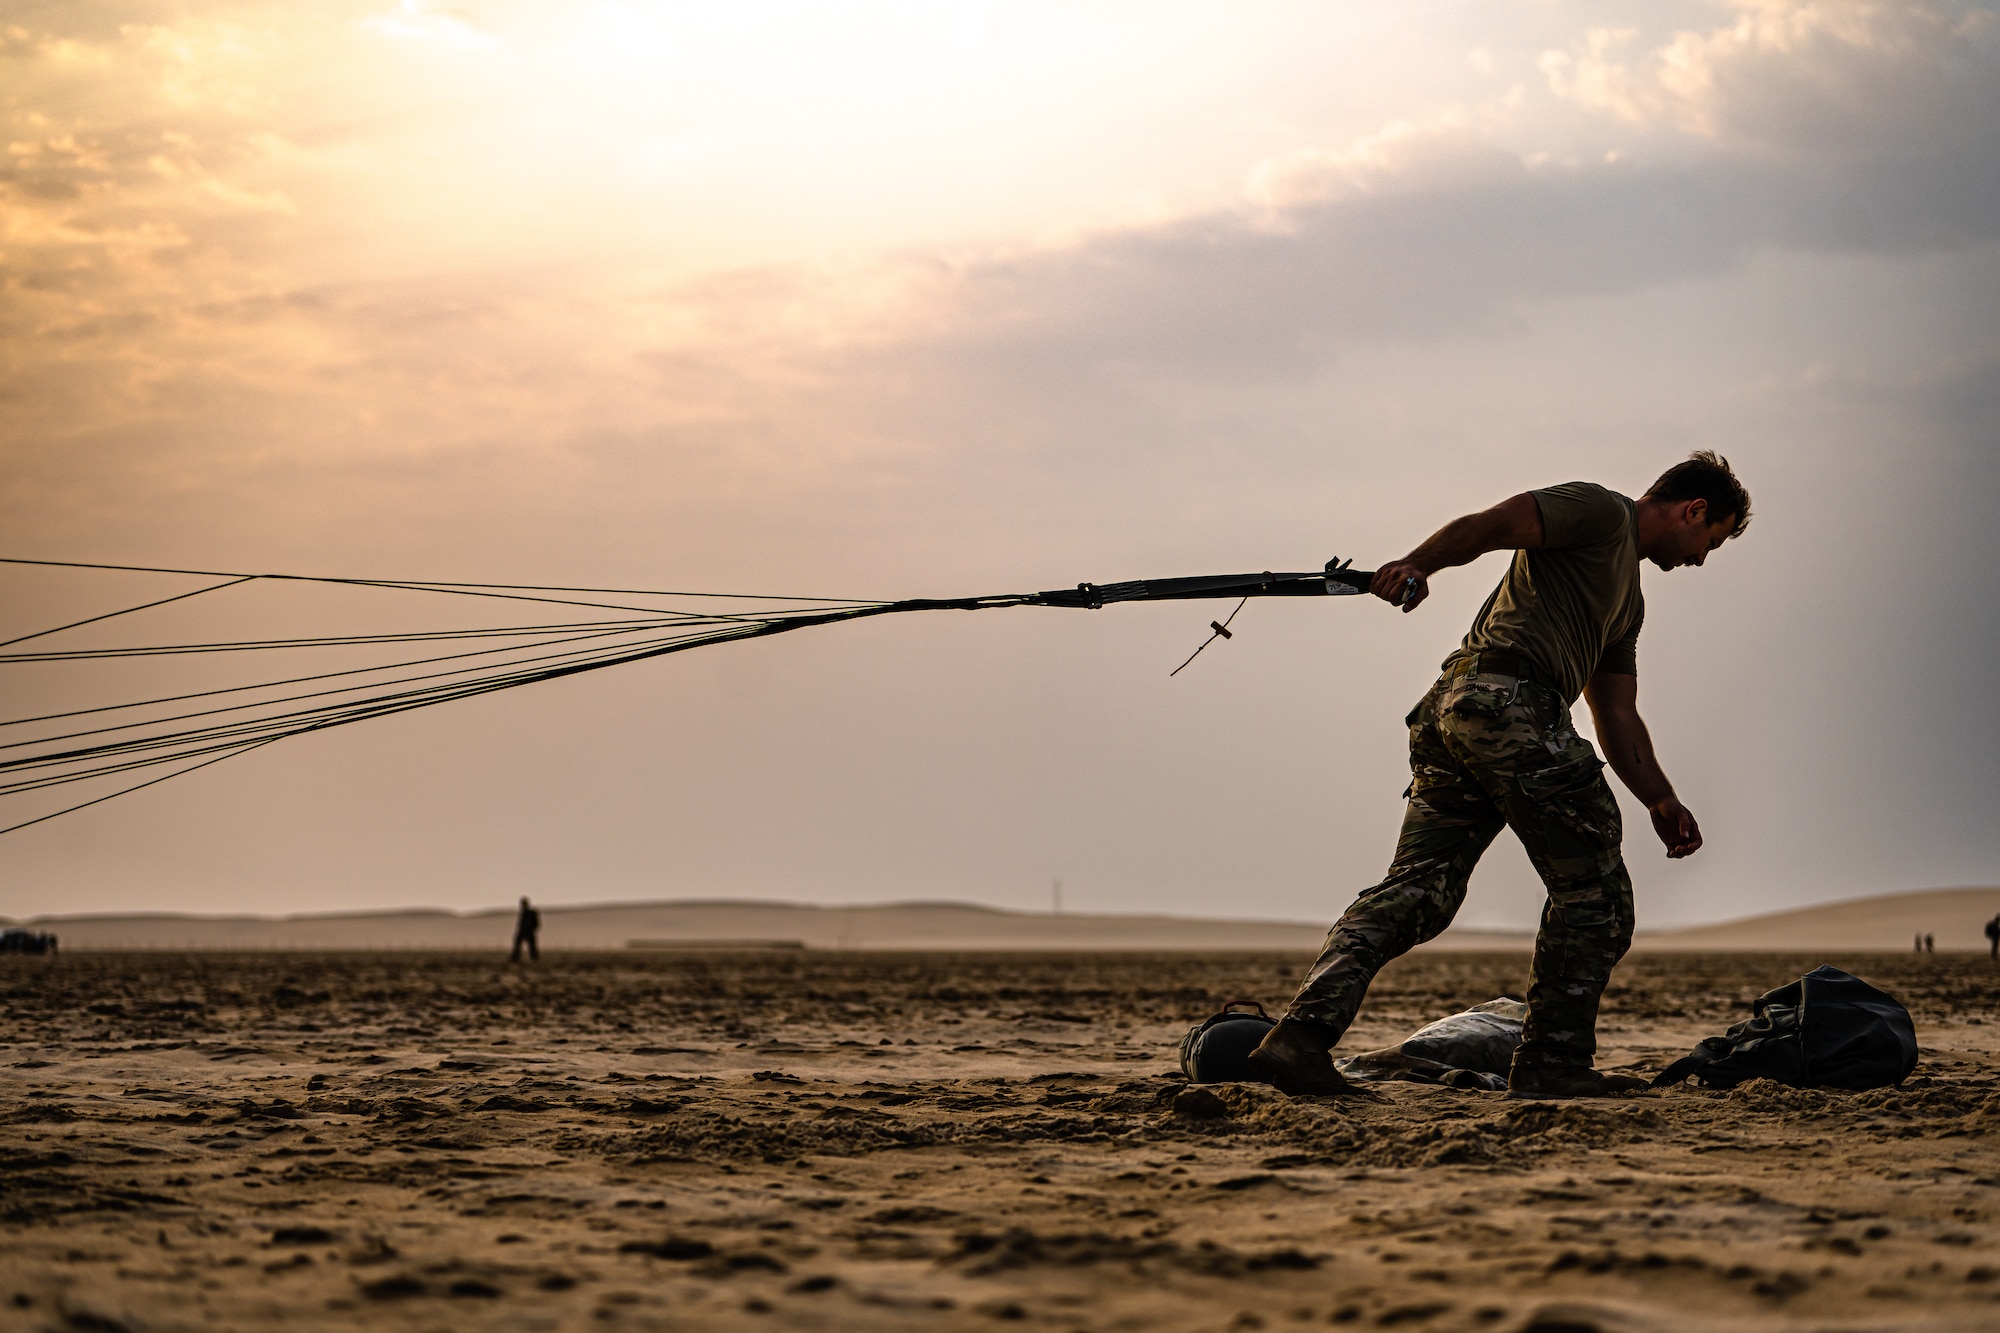 Military member dragging a parachute through the sand